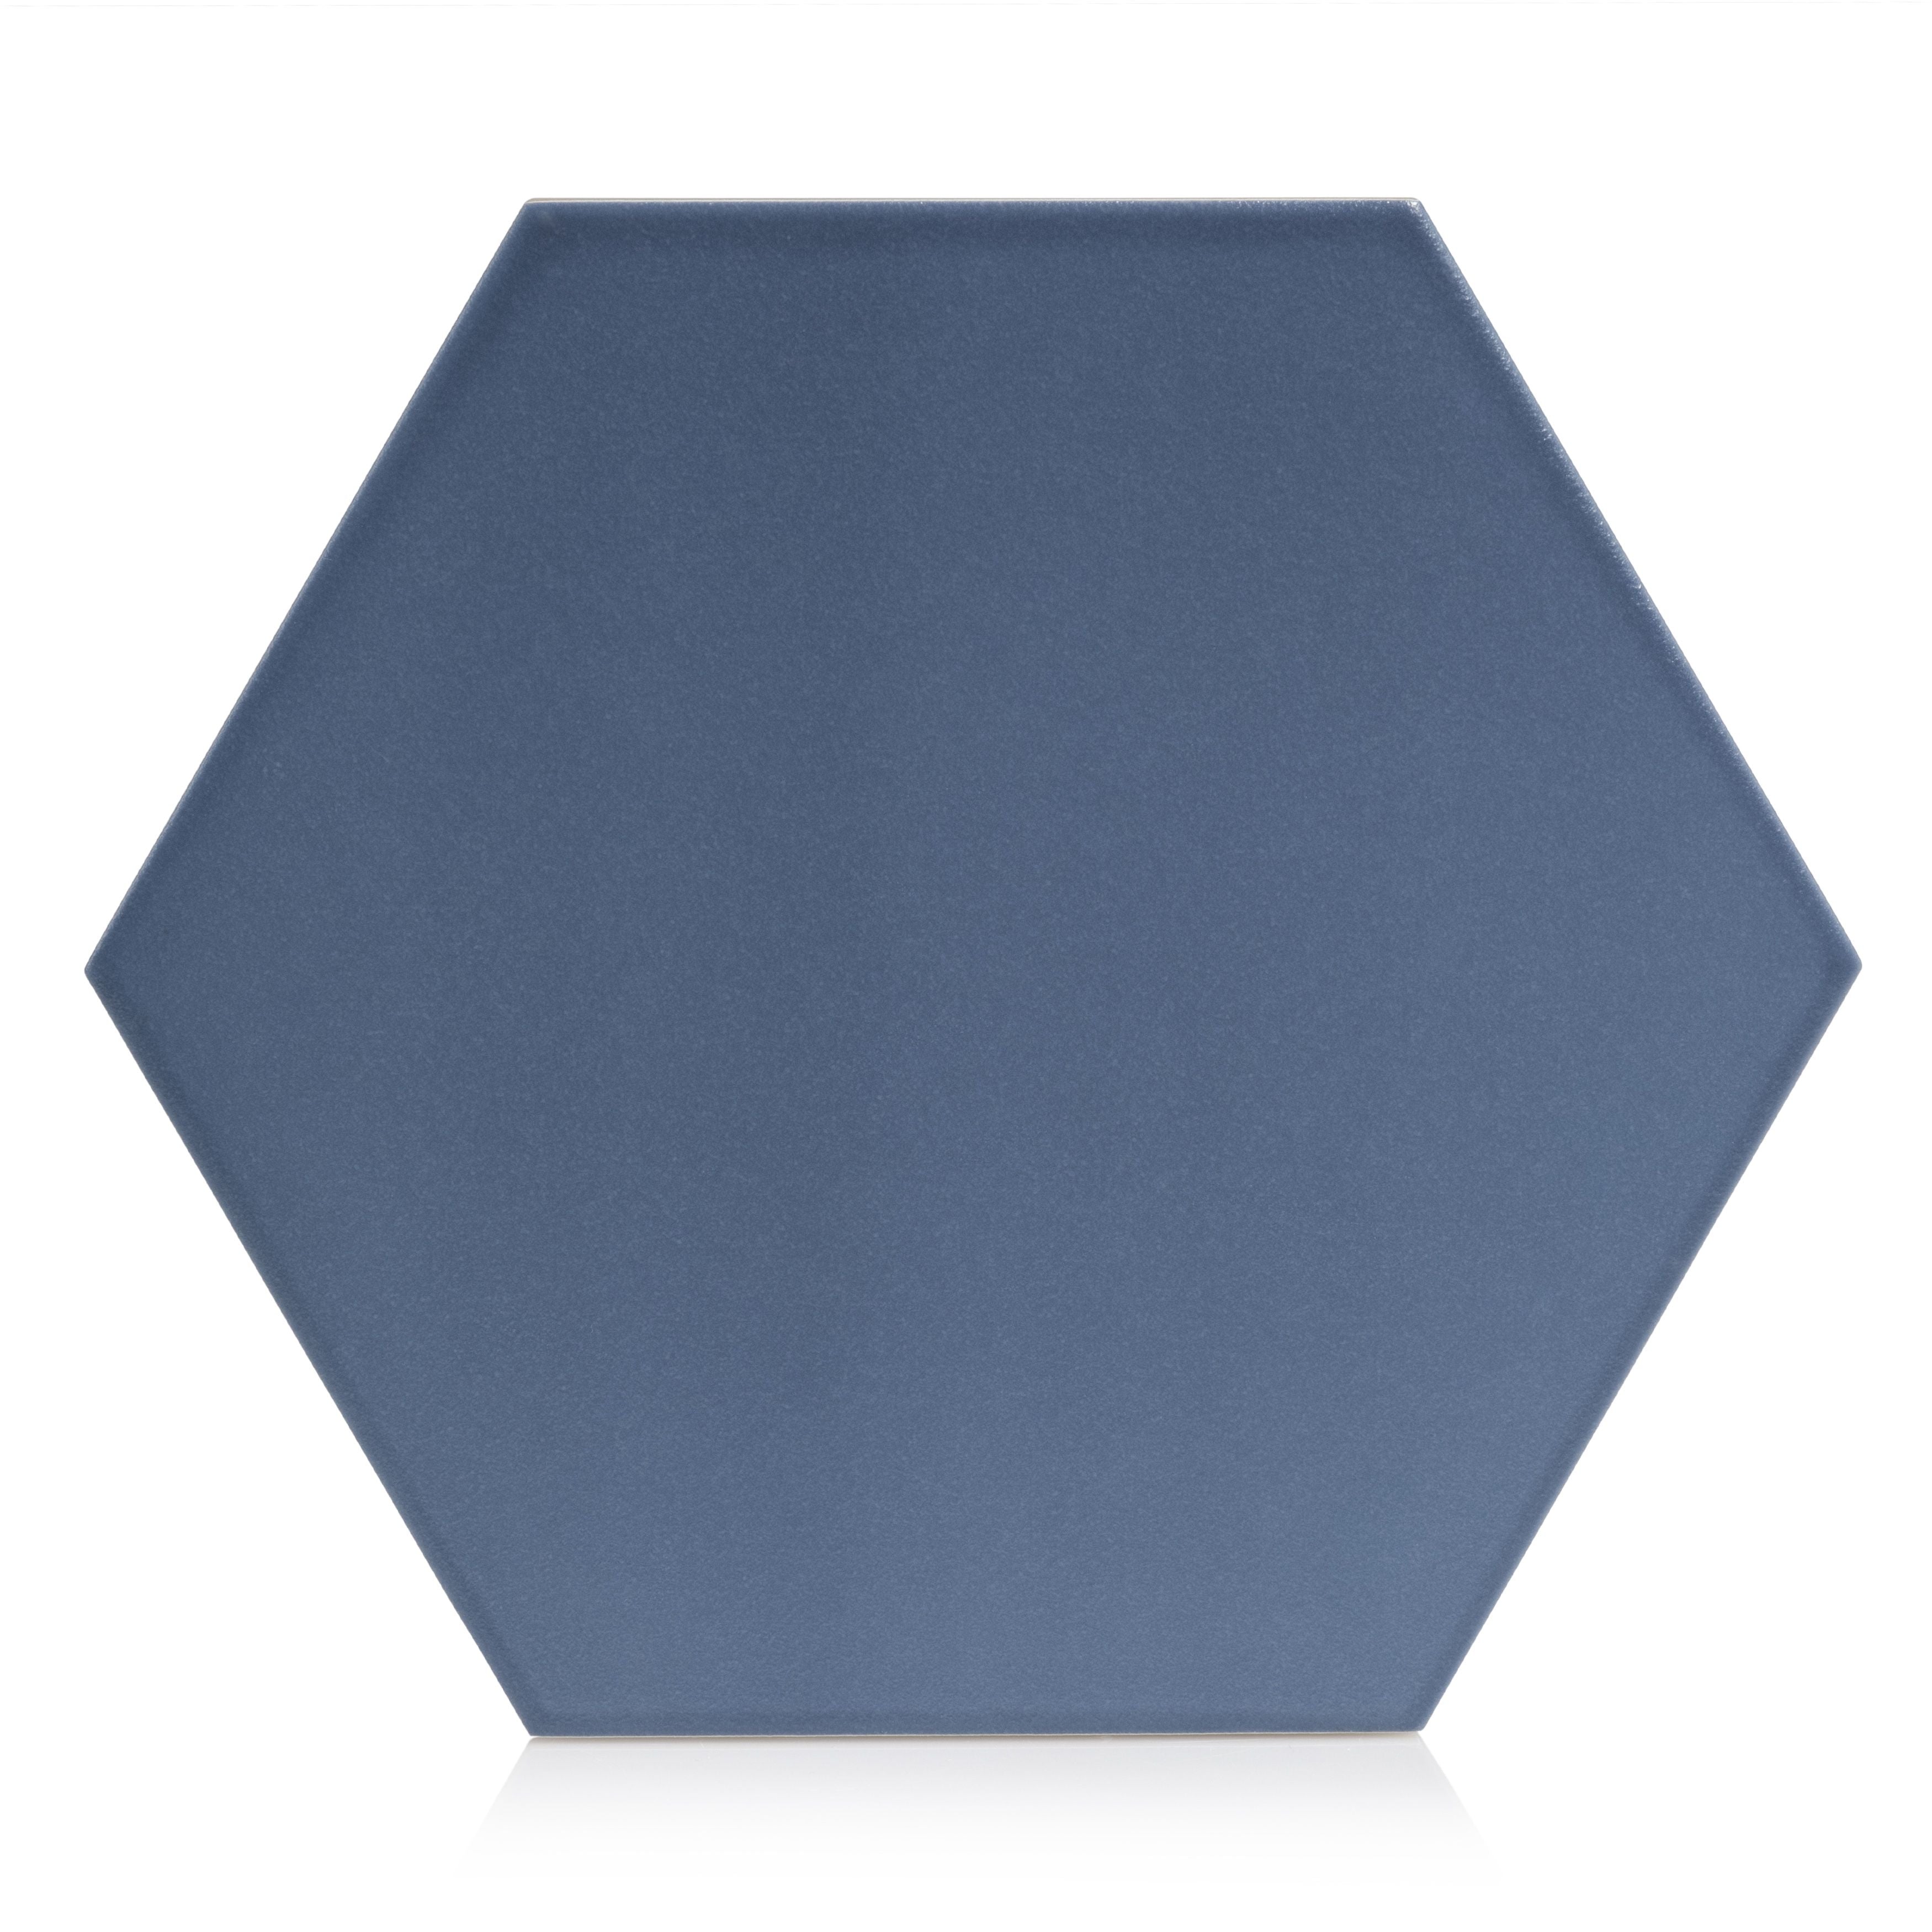 7.8x9 Tribeca Hexagon Blue porcelain tile - Industry Tile